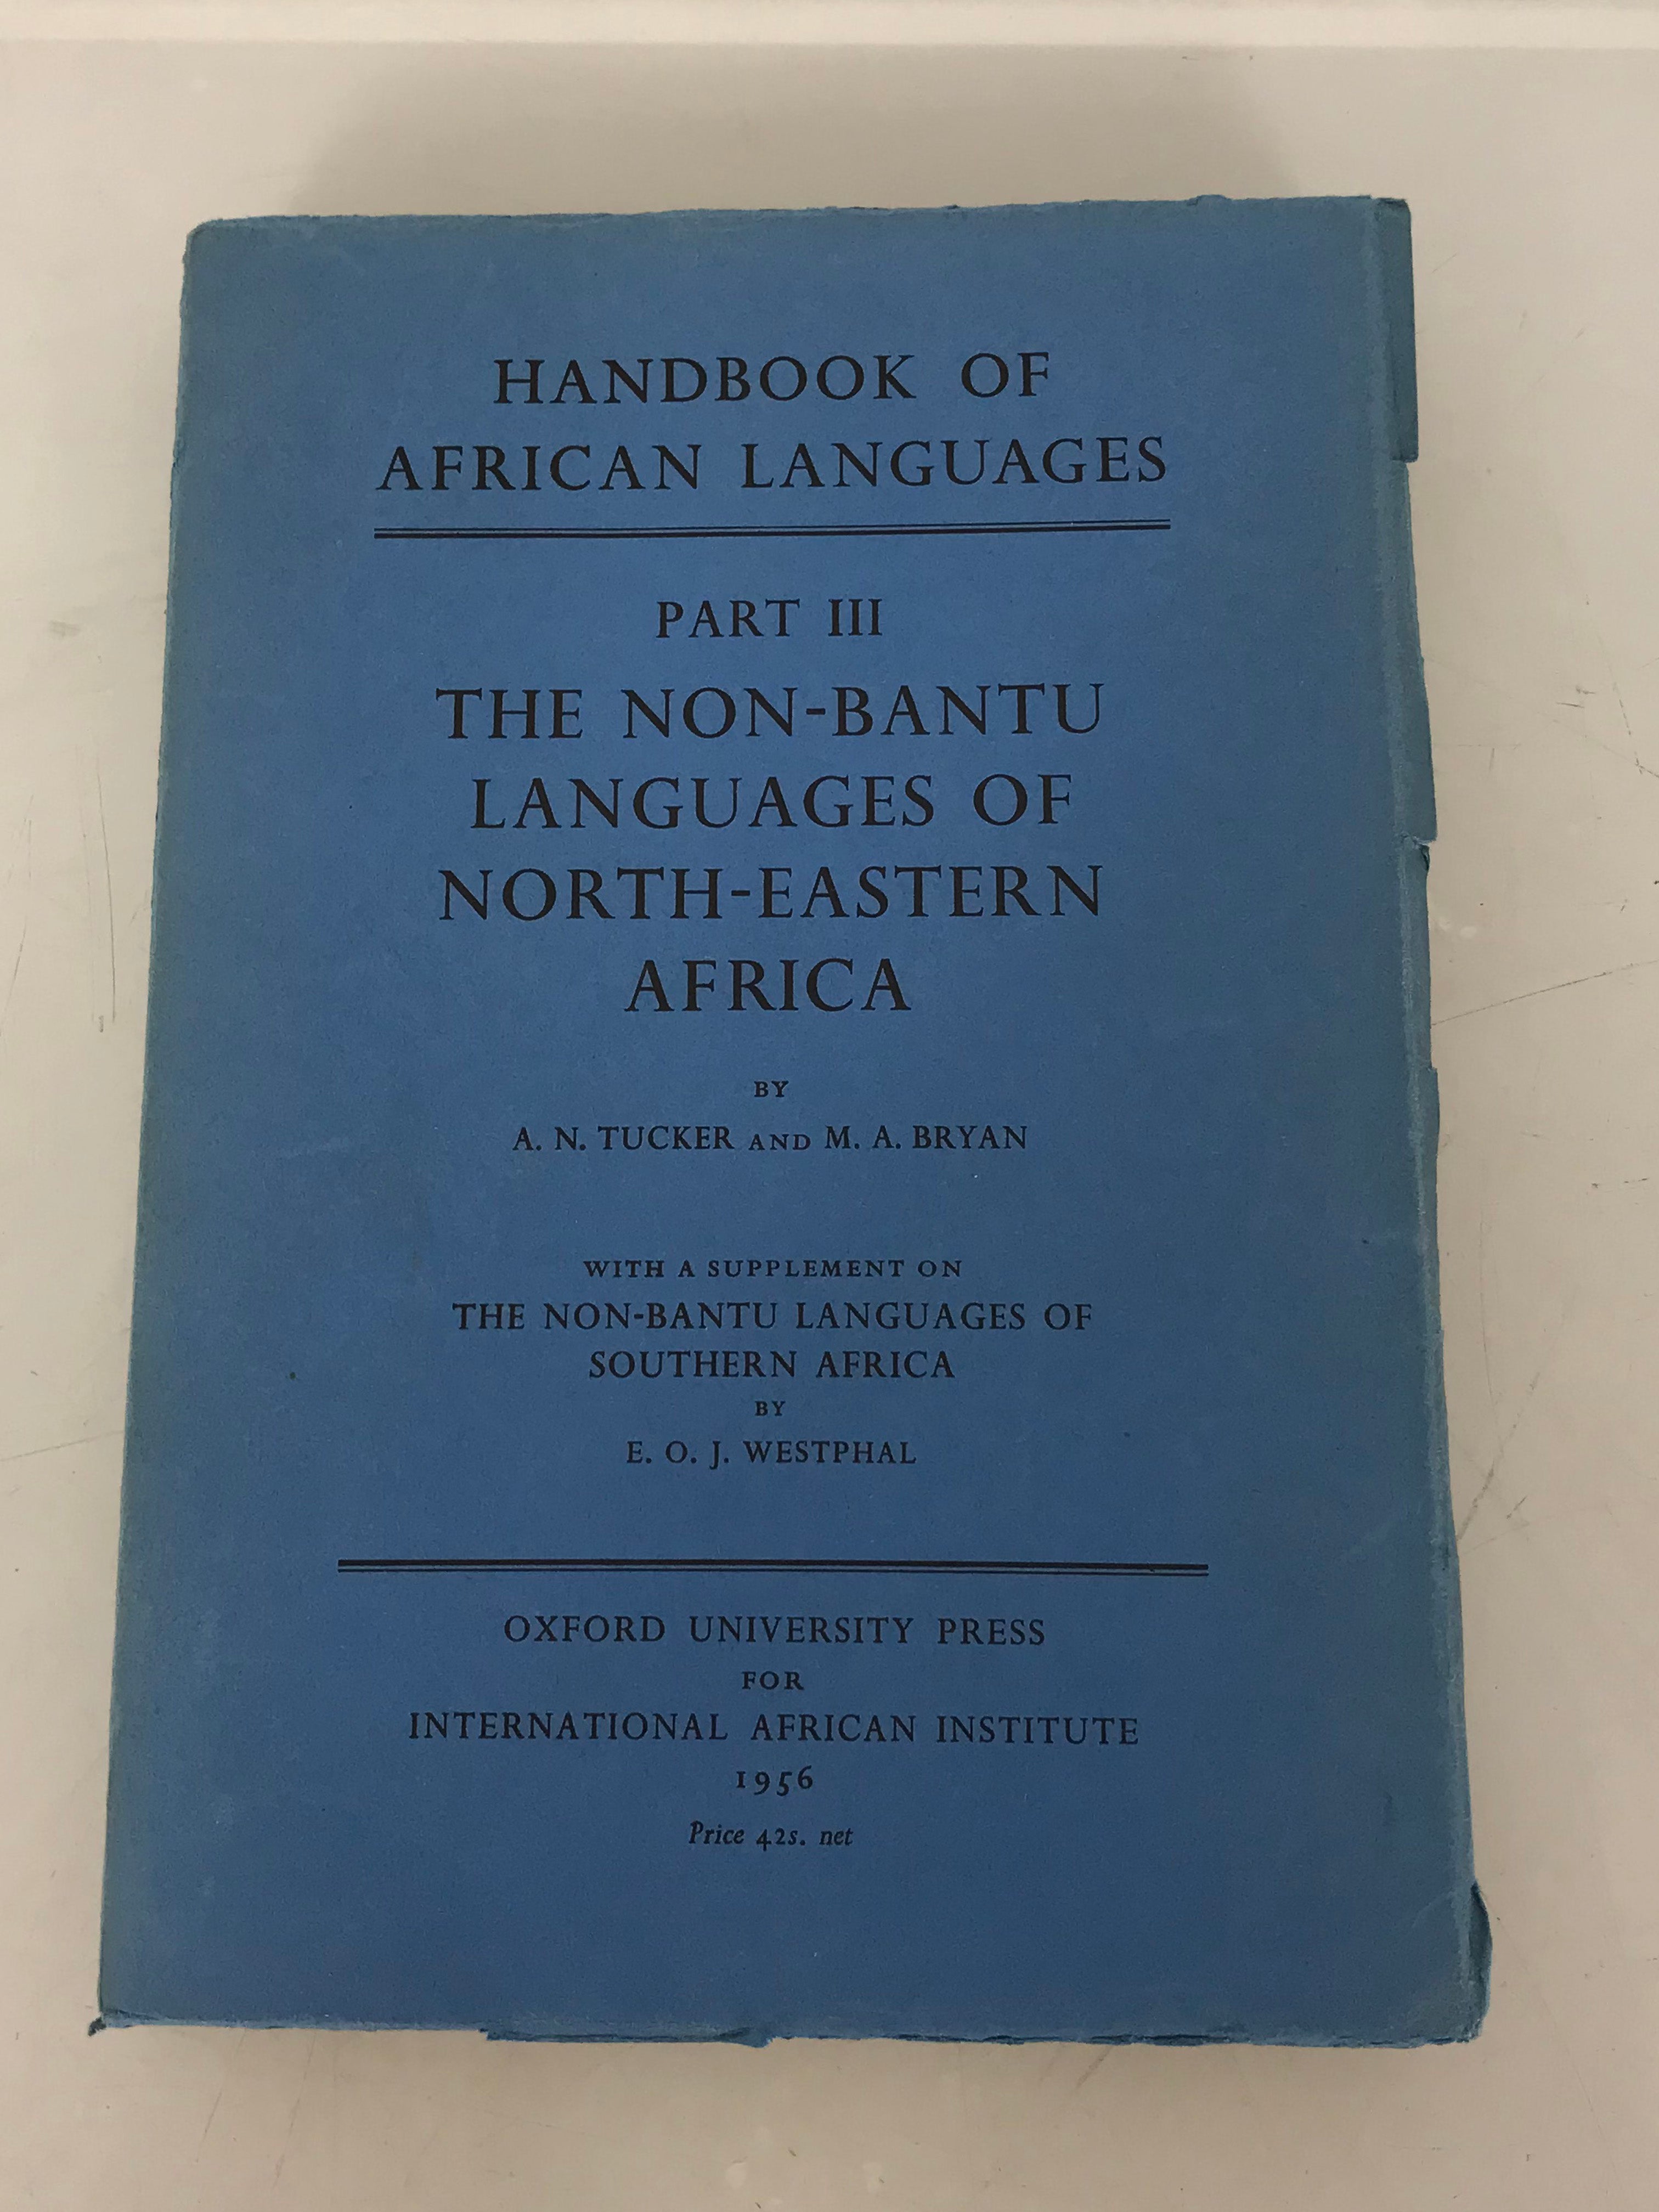 Handbook of African Languages Part 3 by Tucker & Bryan 1956